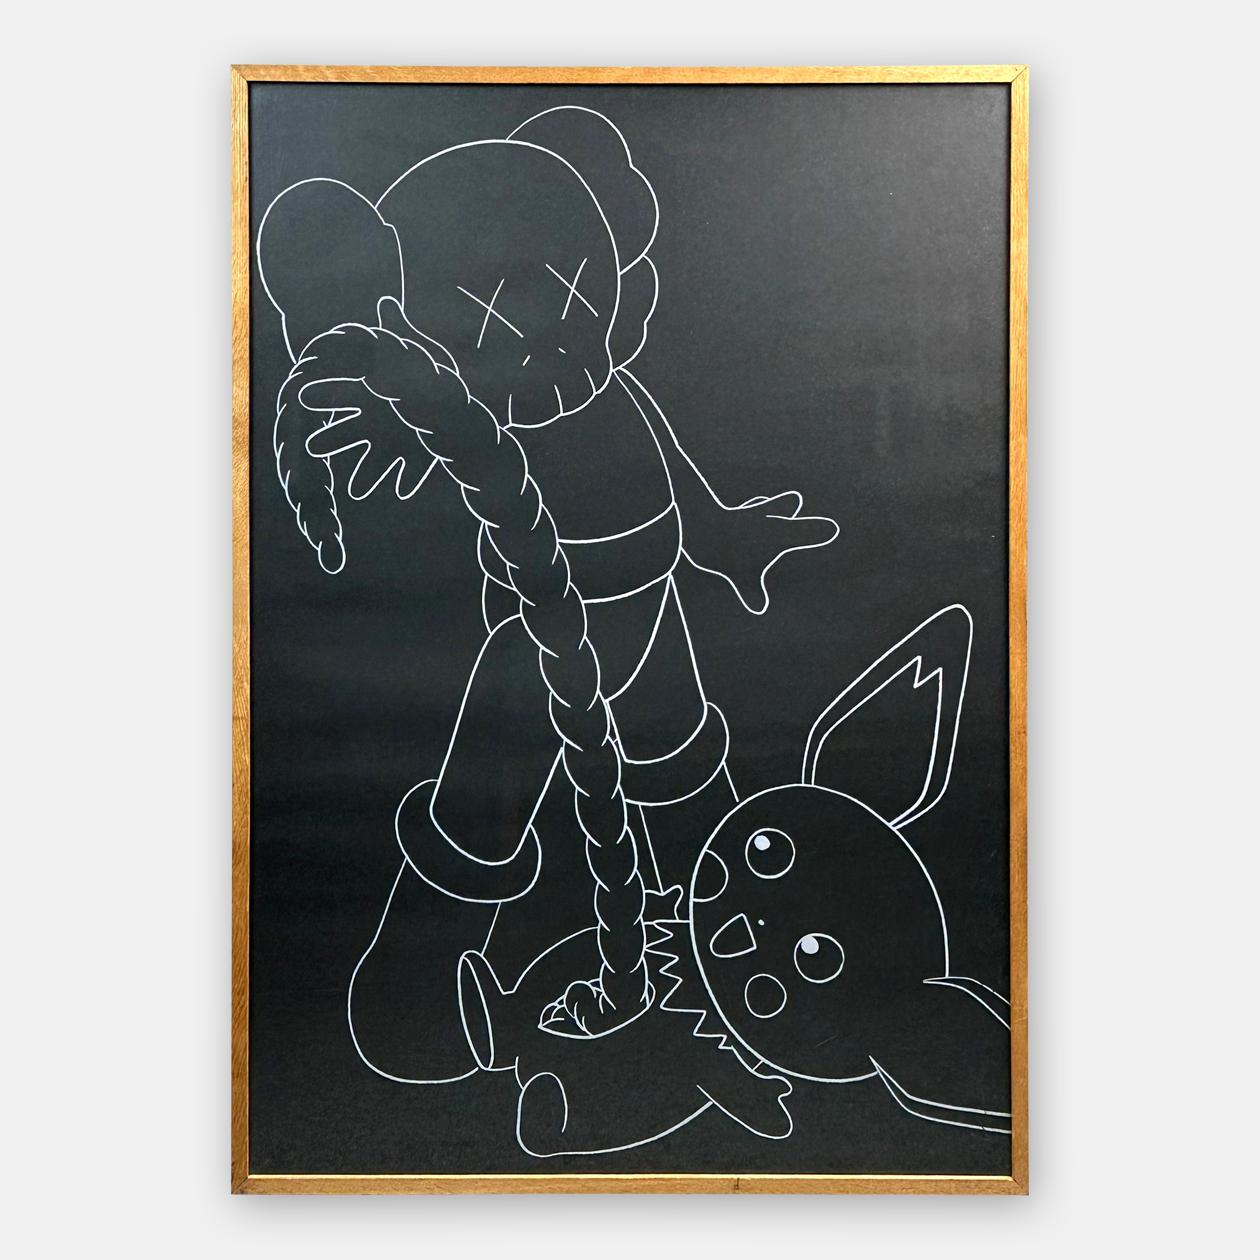 KAWS Portrait Print - Companion vs Pikachu